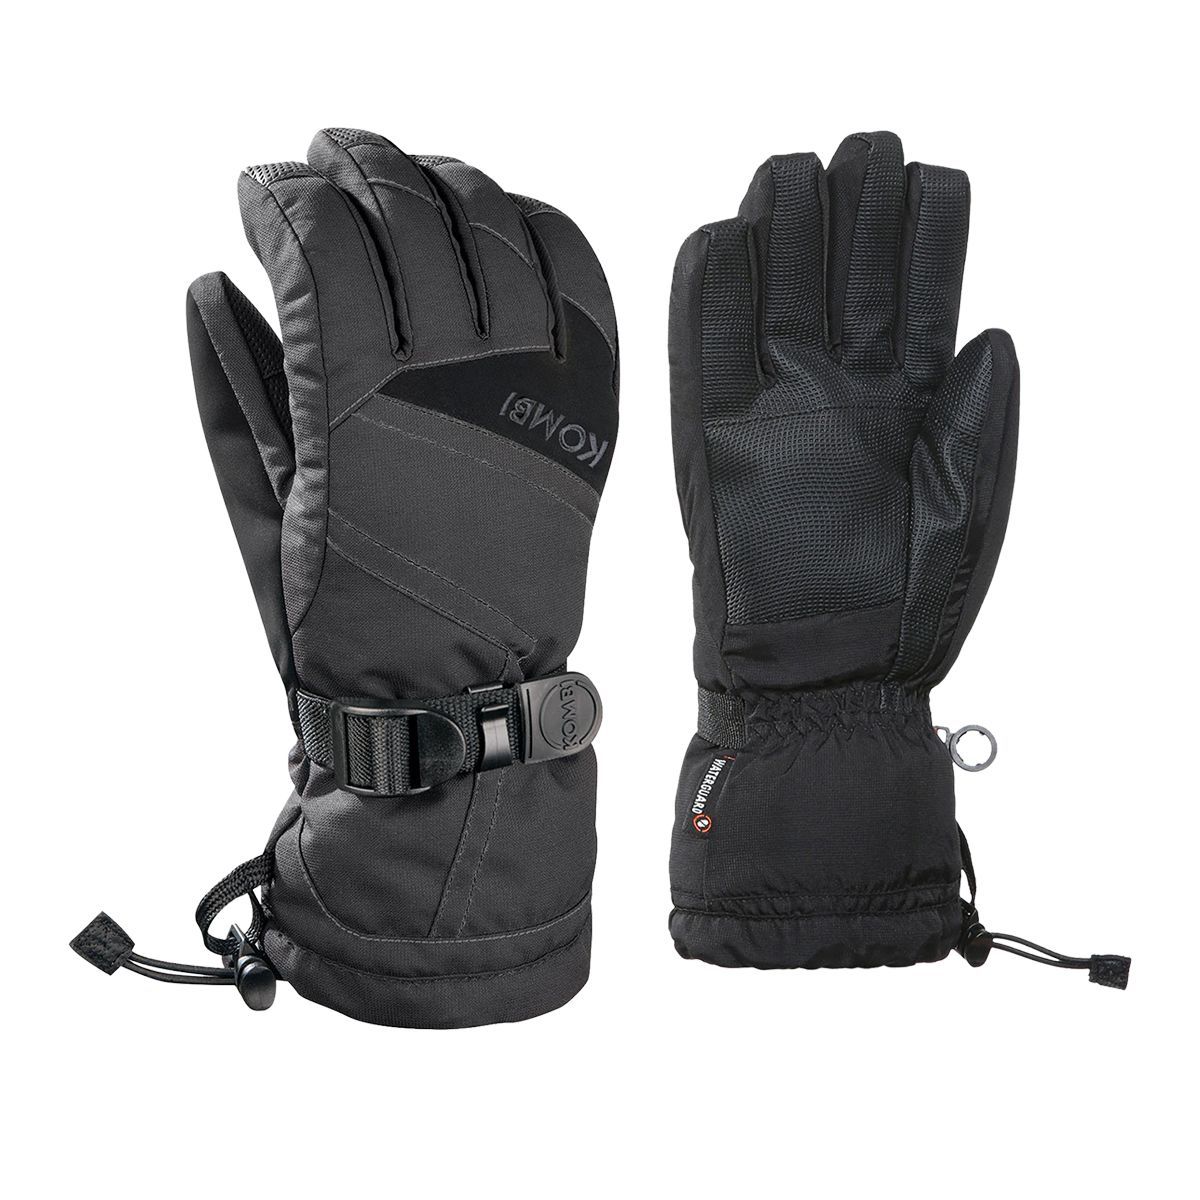 Kombi Men's Original Gloves - Black